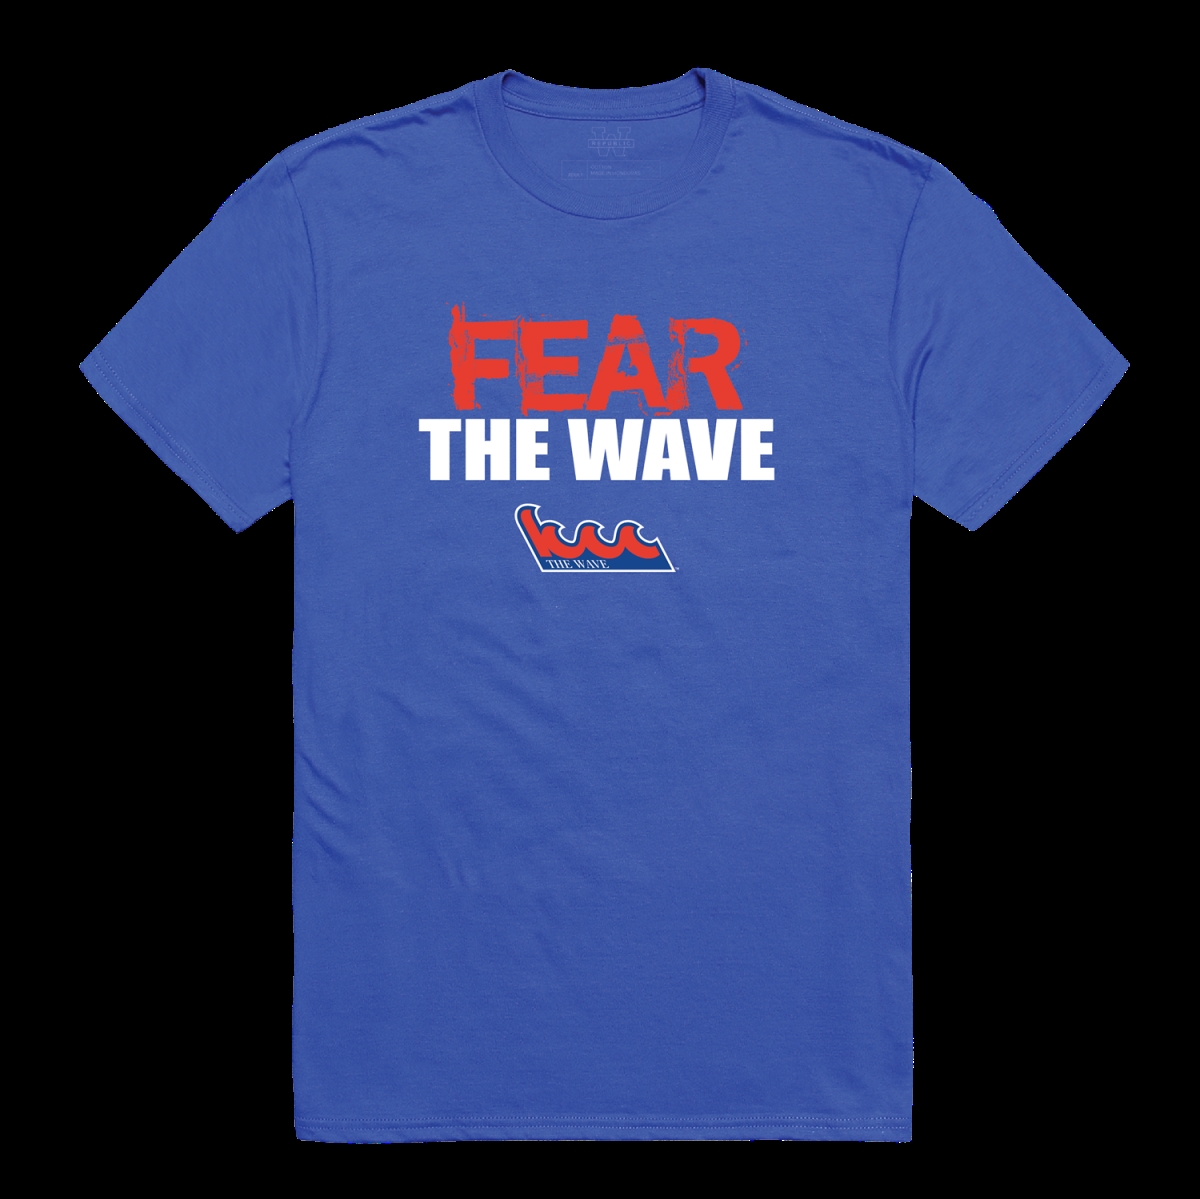 W Republic 518-660-RYL-03 Kingsborough CC The Wave Fear College T-Shirt&#44; Royal Blue - Large